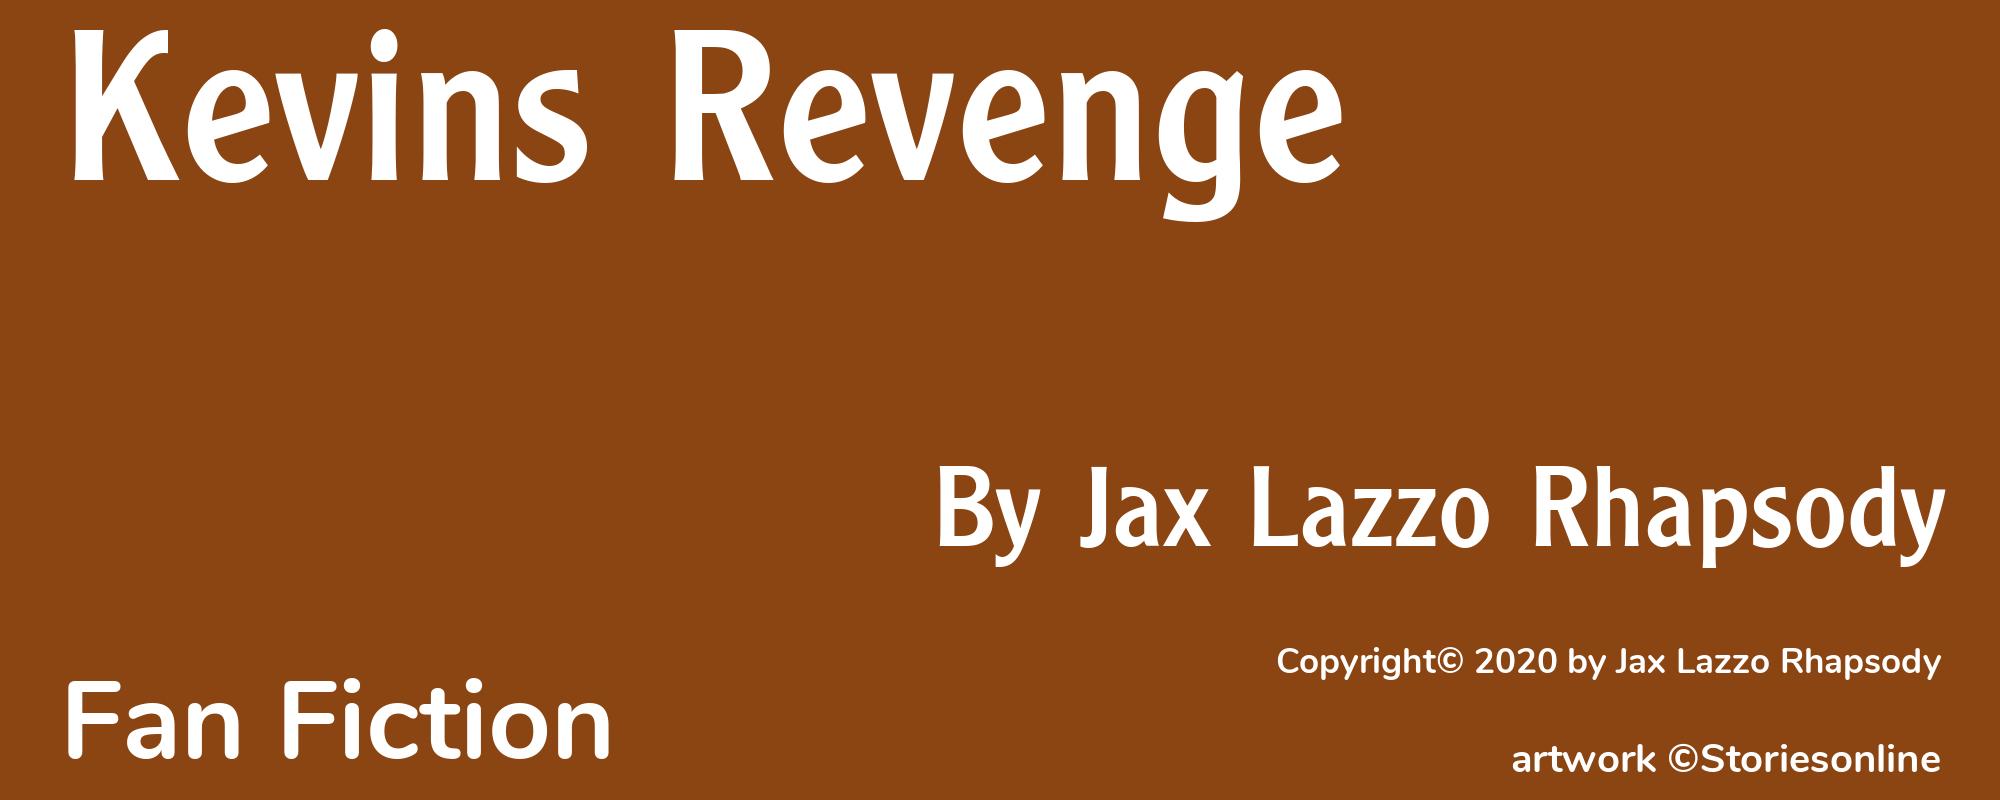 Kevins Revenge - Cover